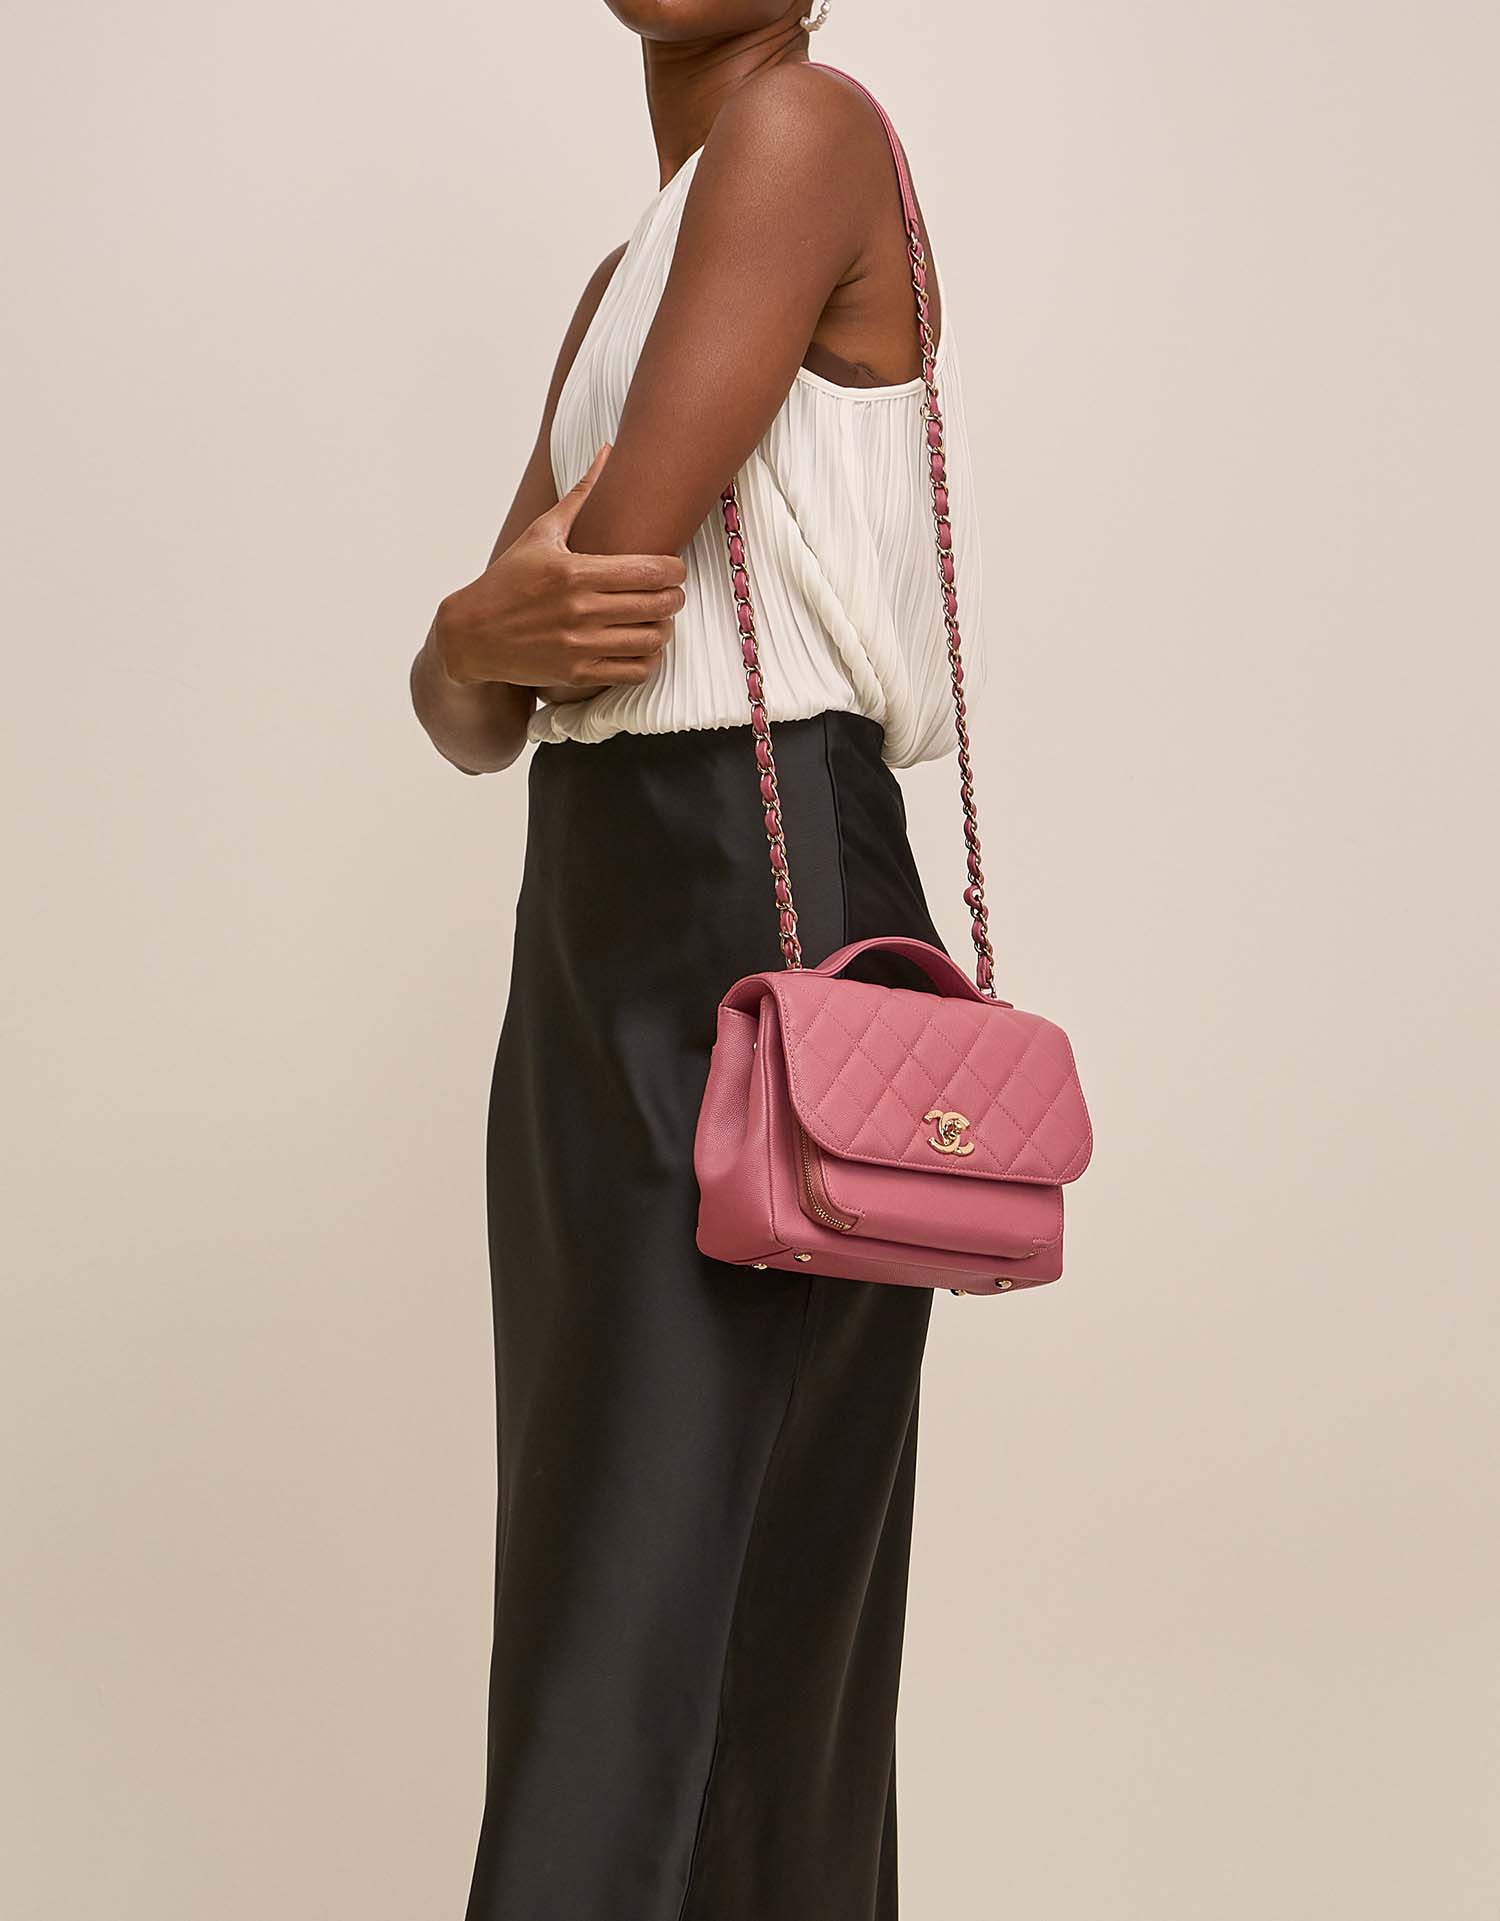 Chanel Business Affinity Medium Coral Pink on Model | Sell your designer bag on Saclab.com